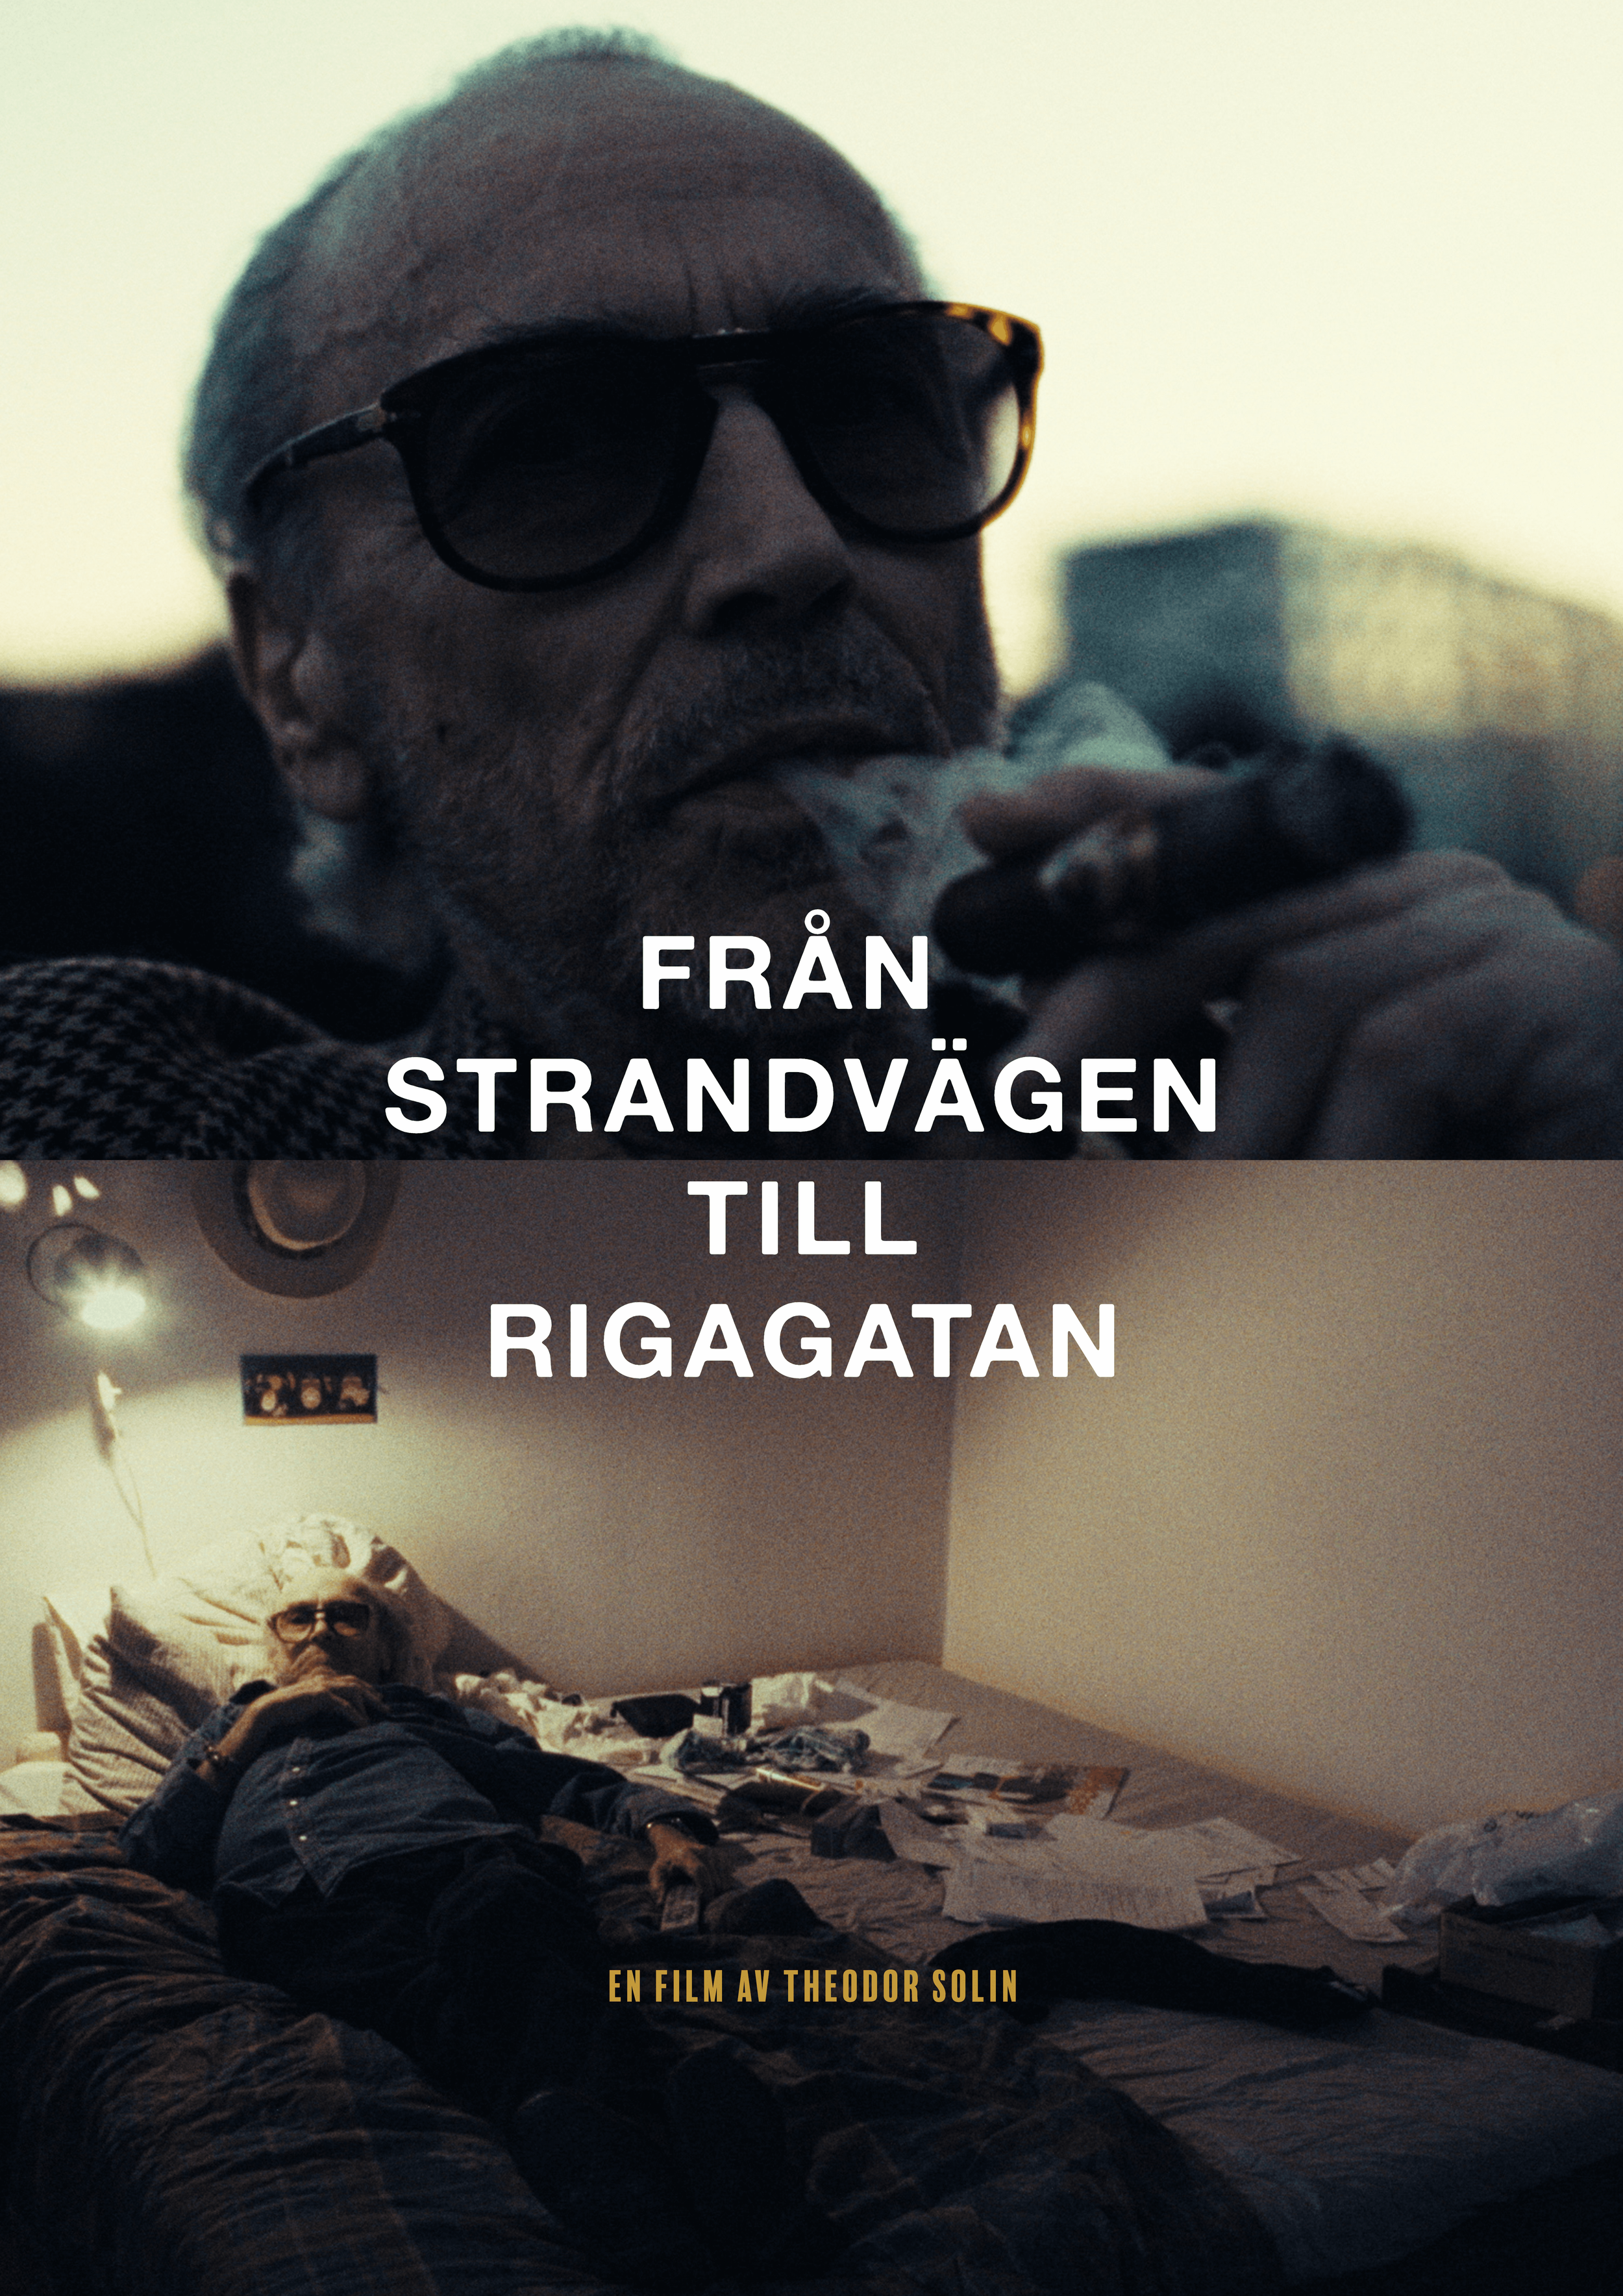 Fran_Strandvagen_till_Rigagatan_Poster_compressed-3.png